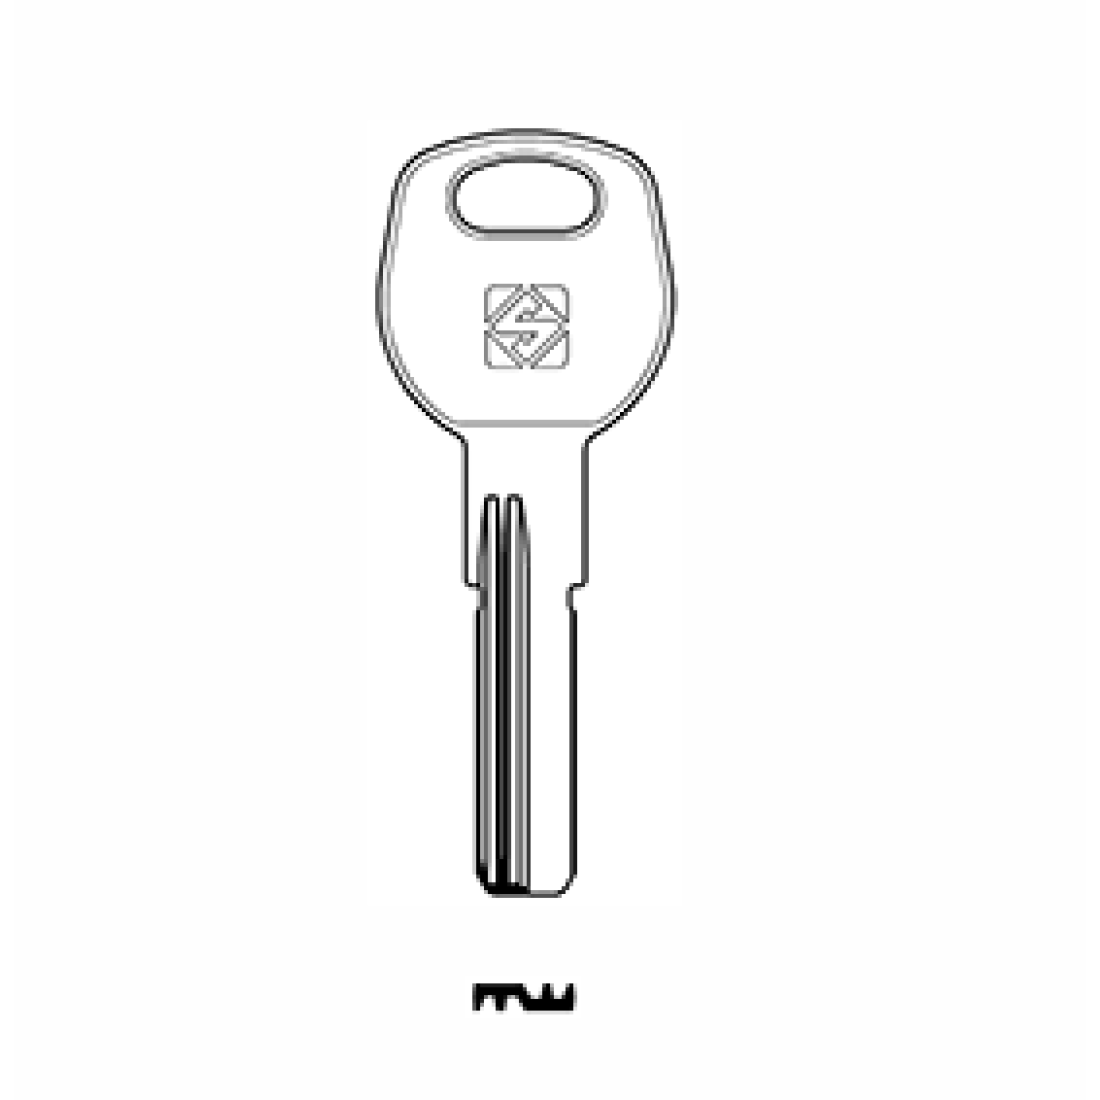 Profile key. Ключ WJ. Заготовка ключа Mercedes Silca. Заготовка пластик Silca. Заготовка луночного ключа.